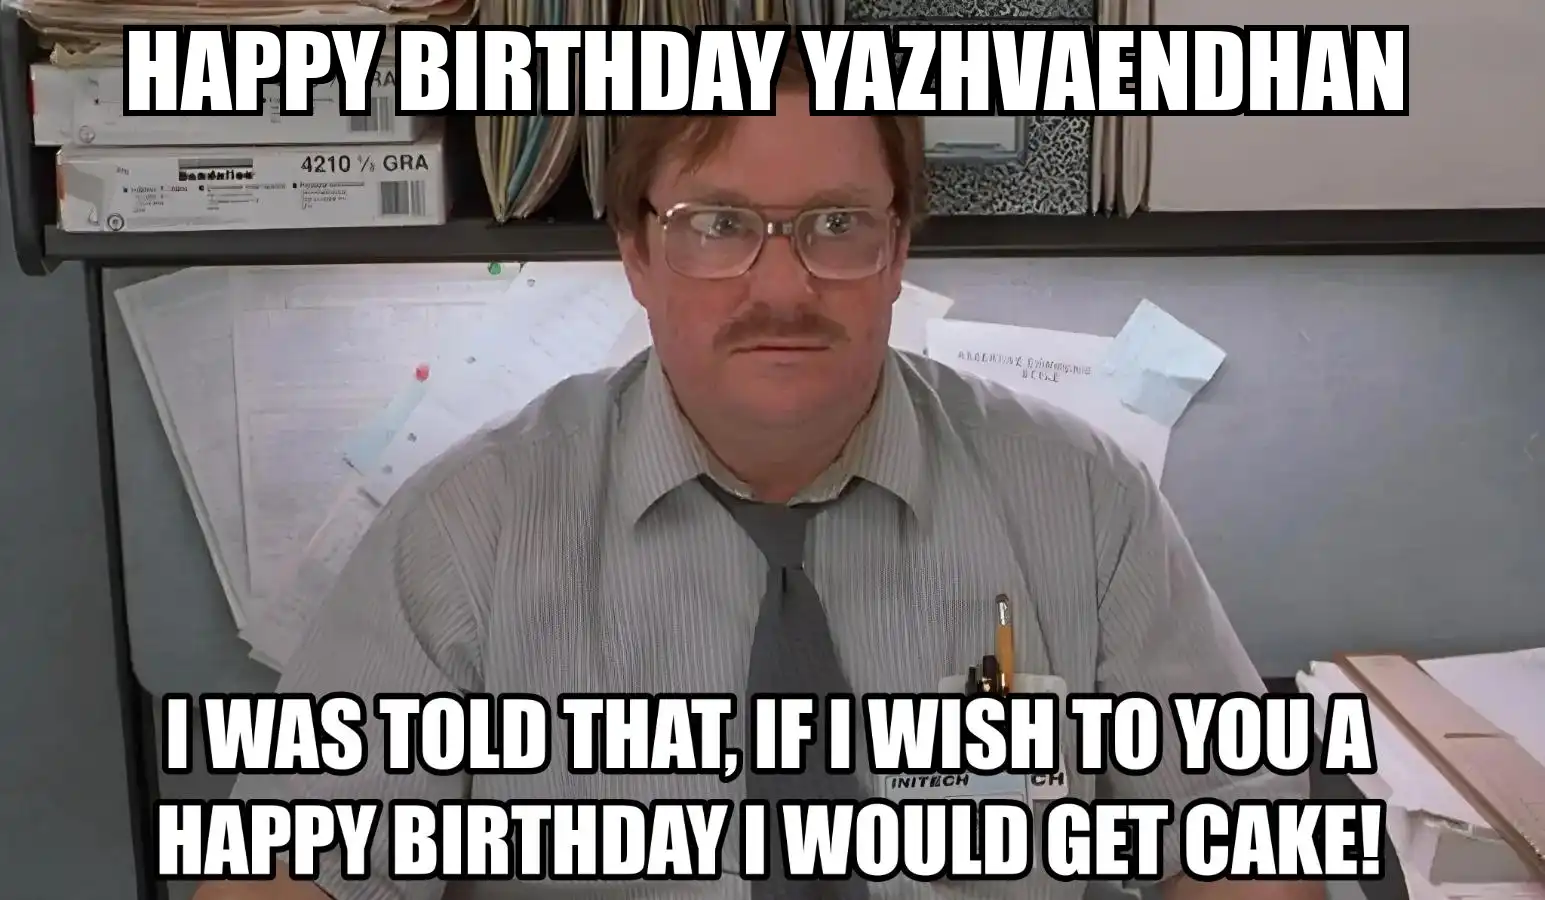 Happy Birthday Yazhvaendhan I Would Get A Cake Meme